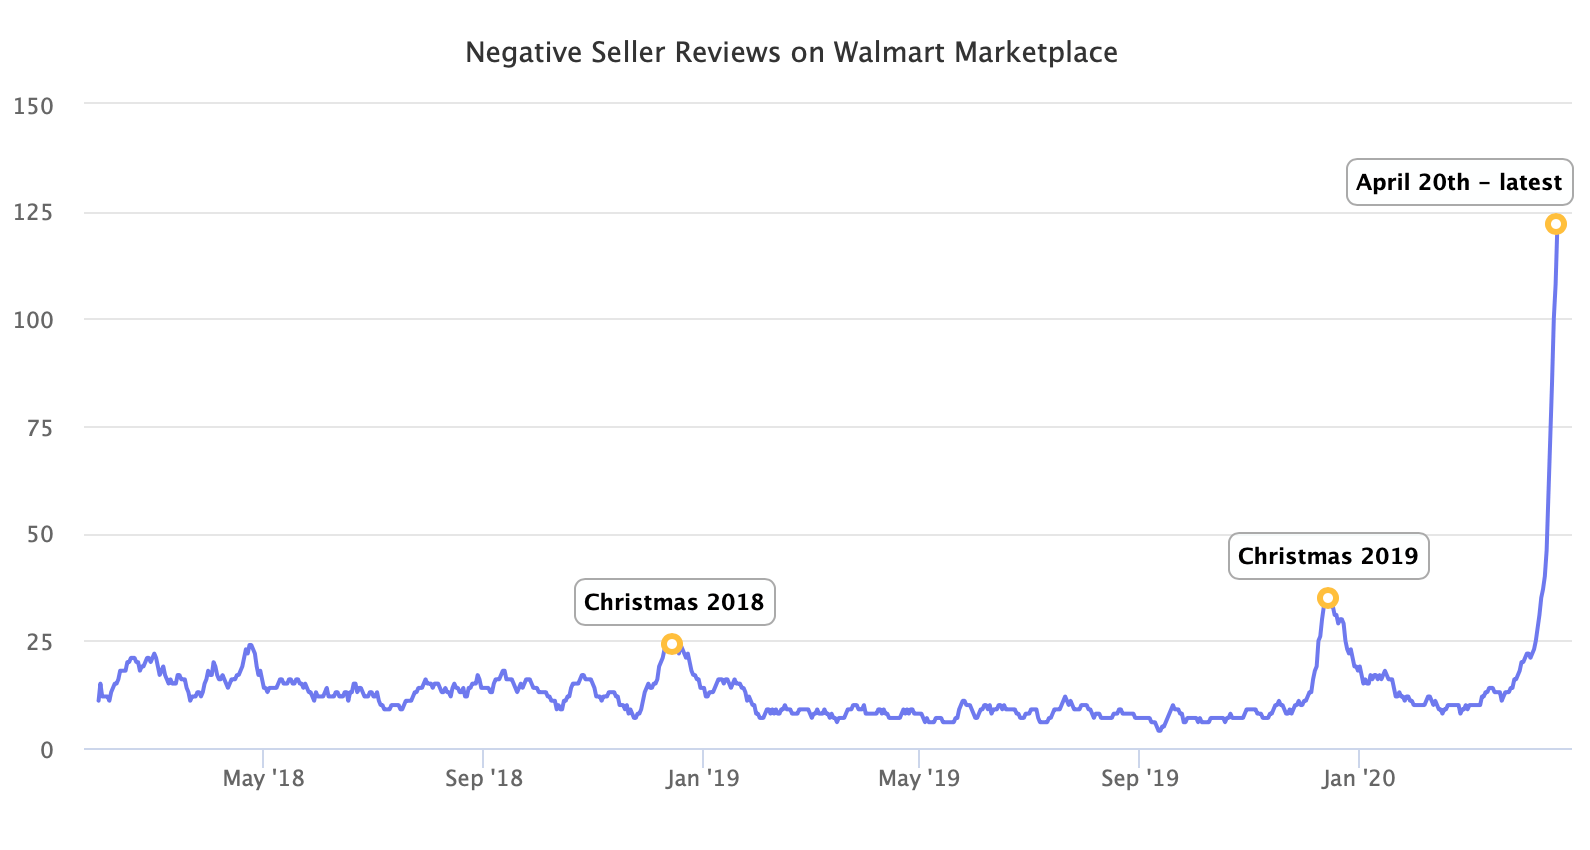 'Negative Seller Reviews on Walmart Marketplace